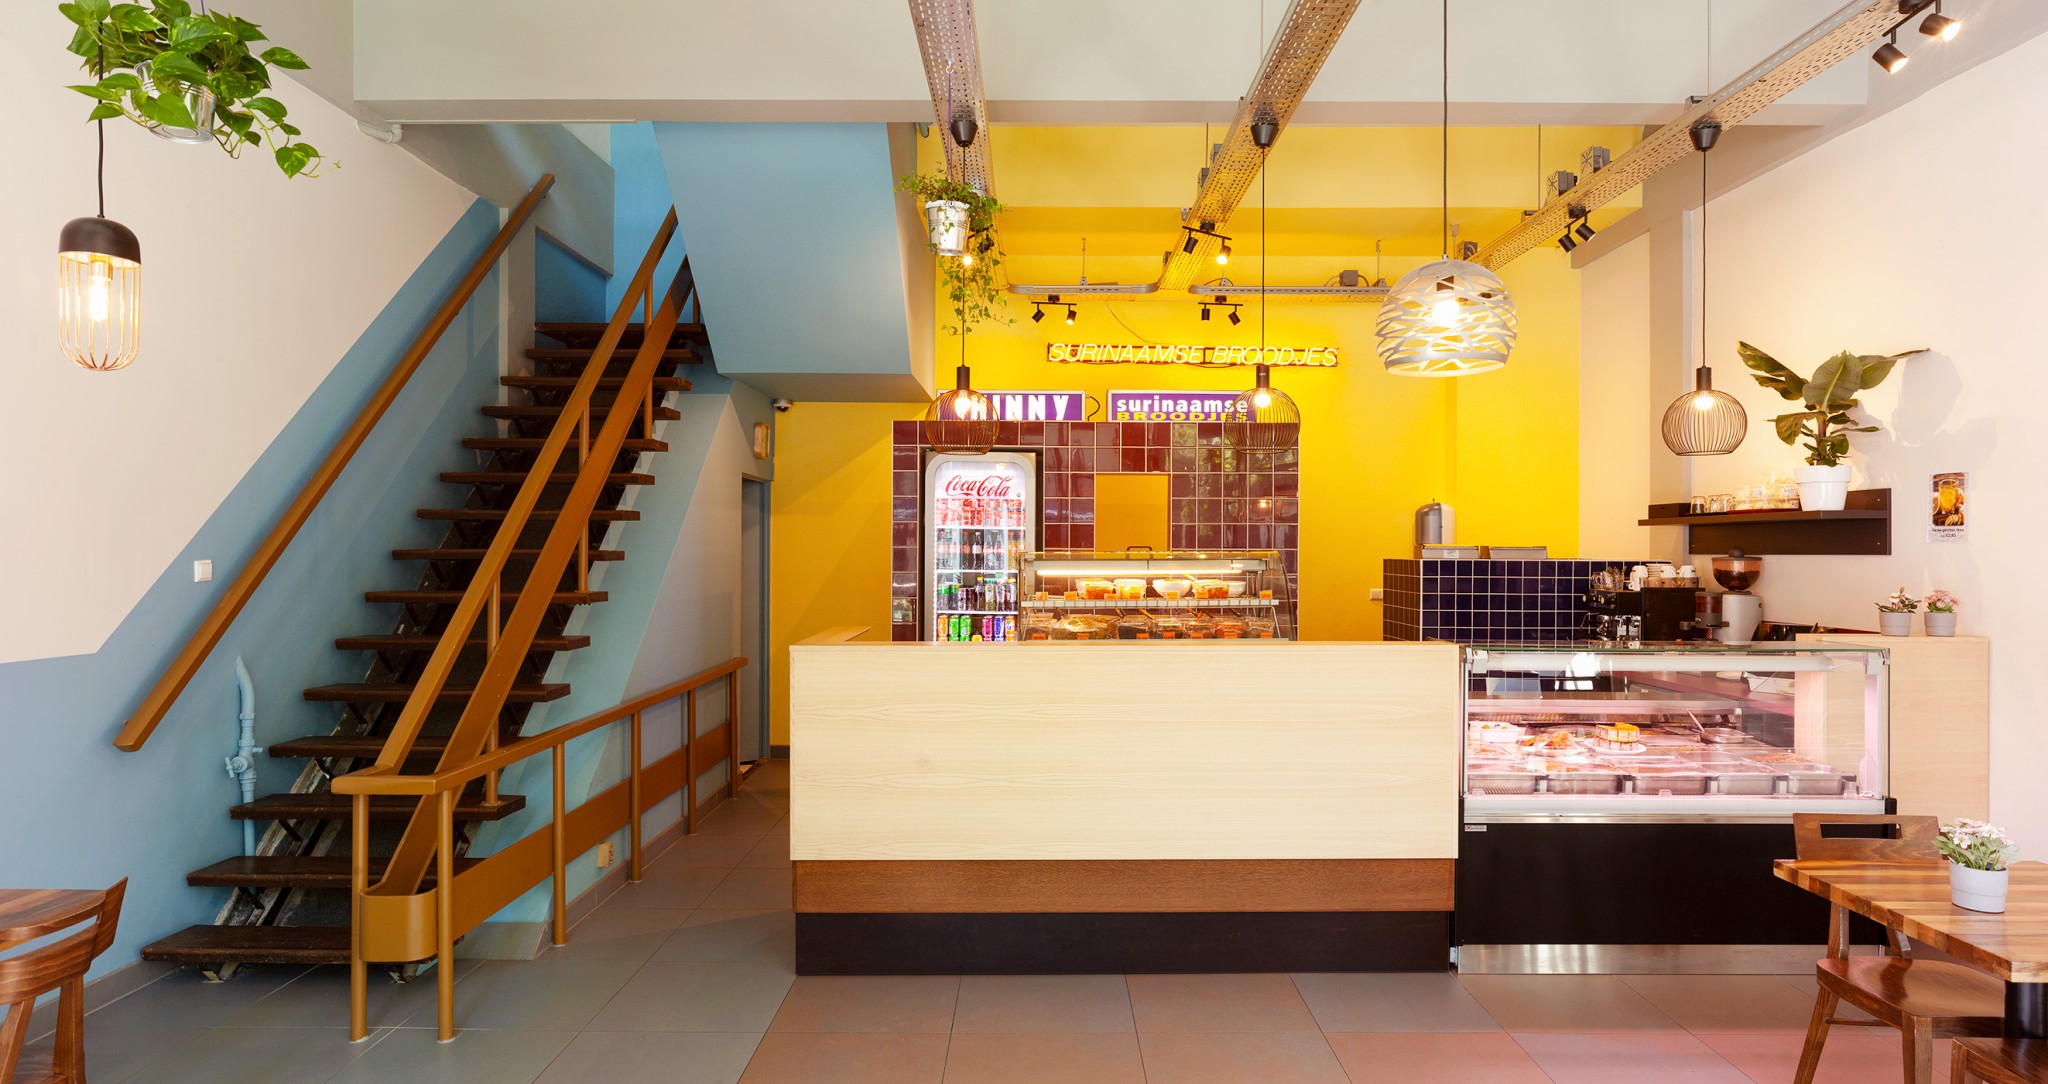 lagado-architects-chinny-surinaamse-broodjes-lijnbaan-rotteram-interieur-kleur